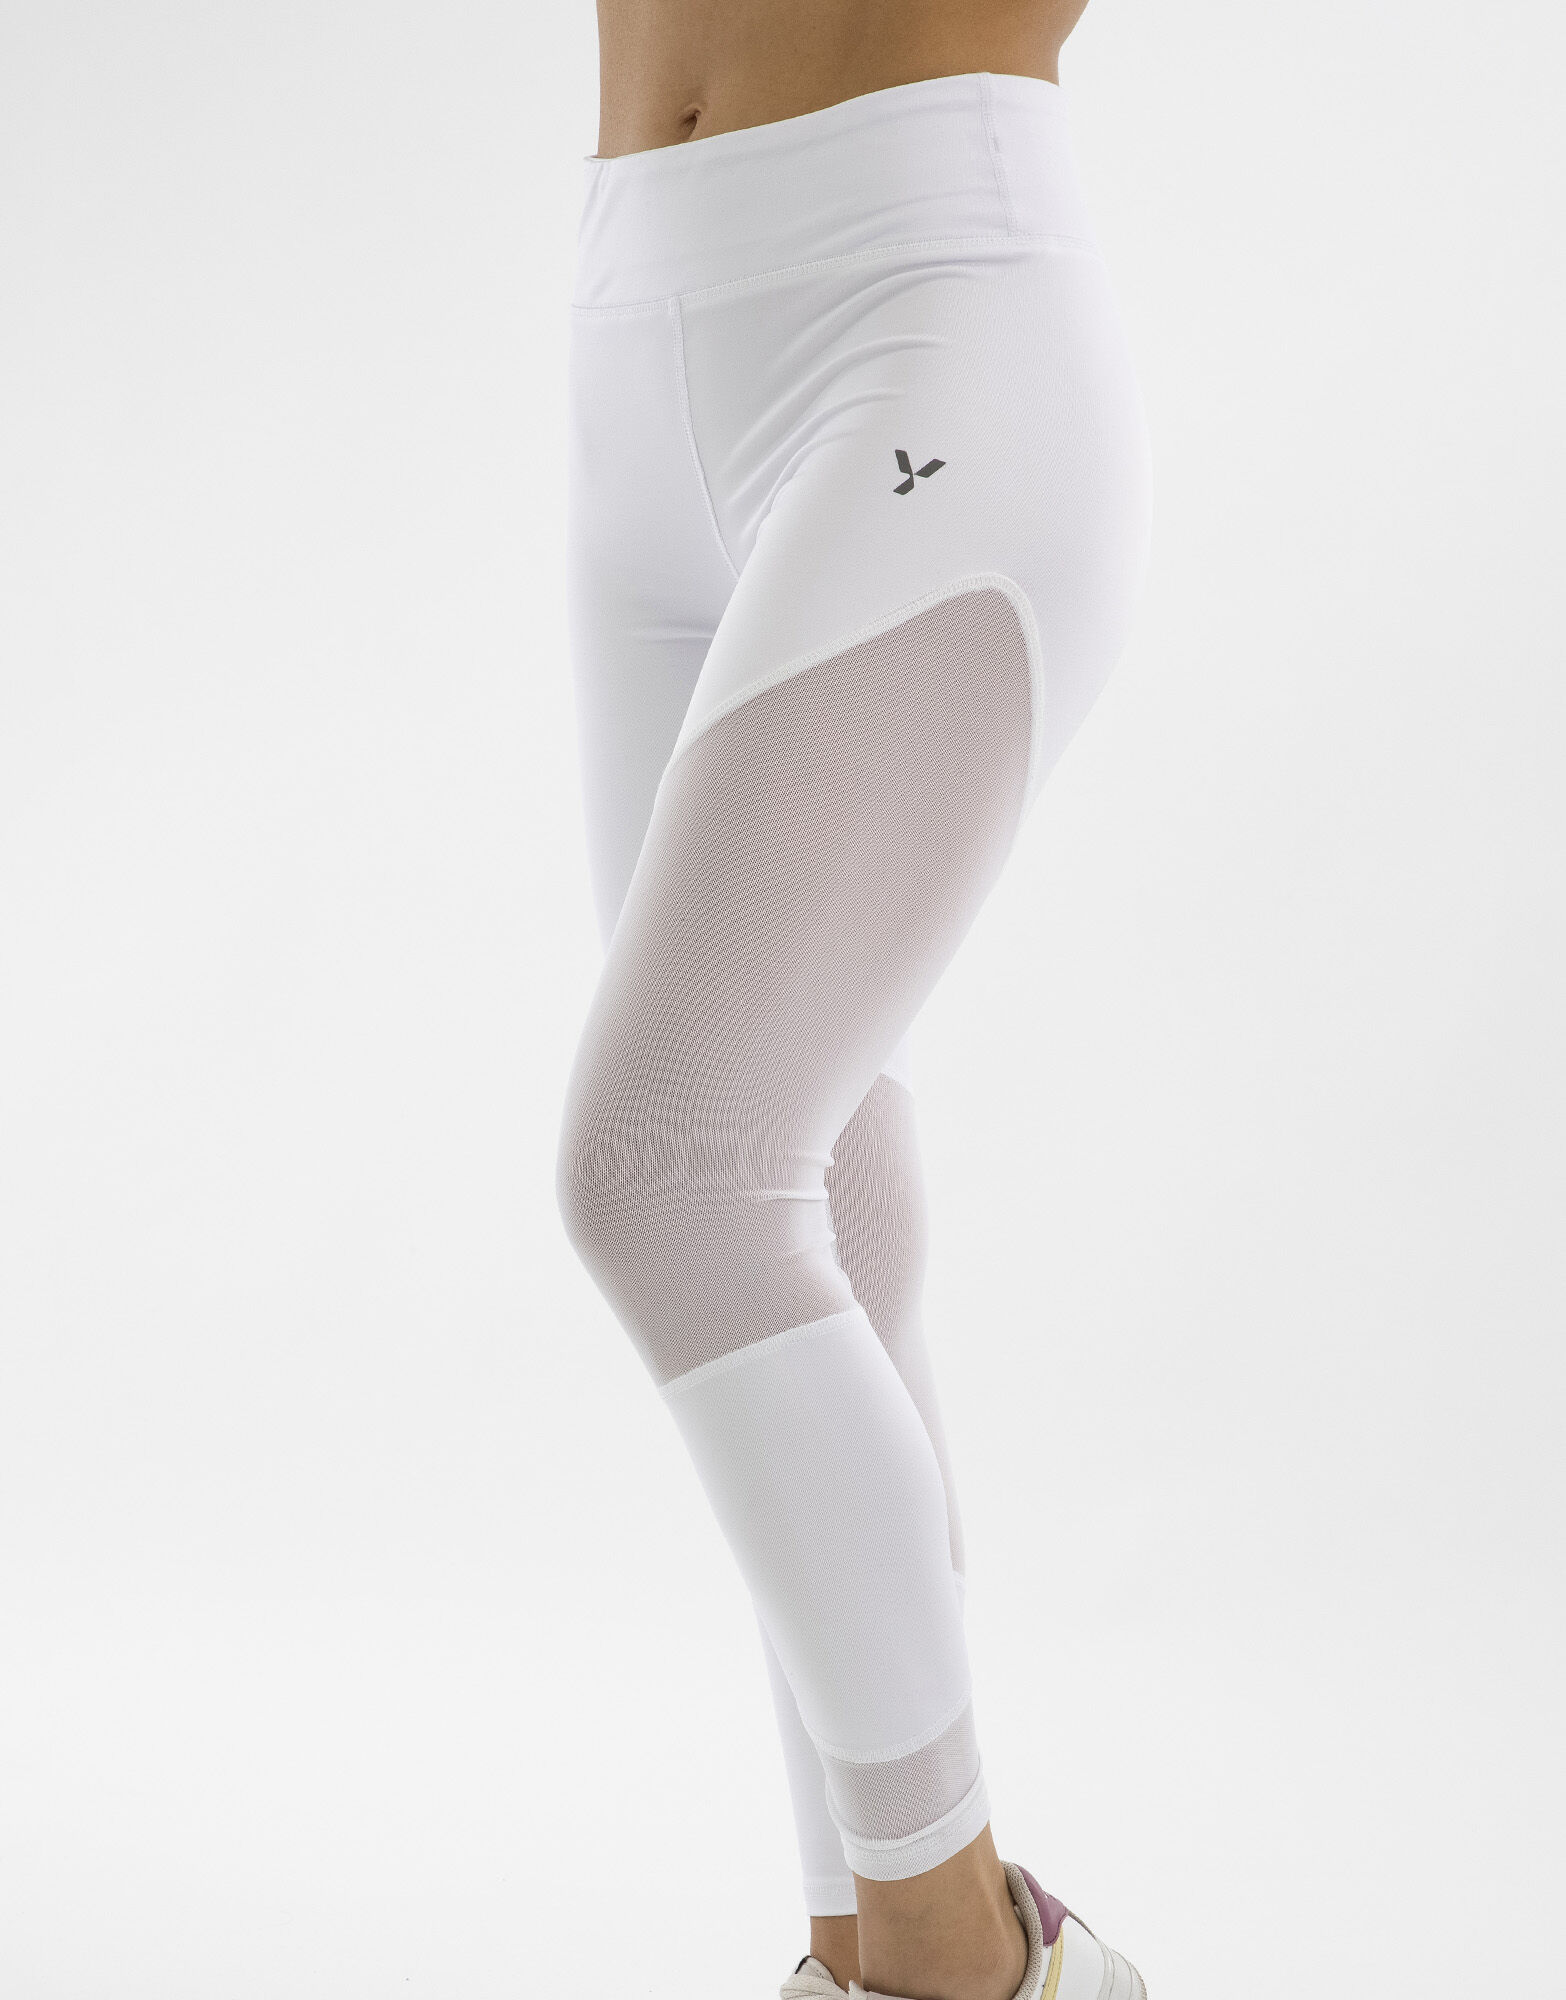 YAMAMOTO OUTFIT Sport Legging Colore: Bianco/bianco S